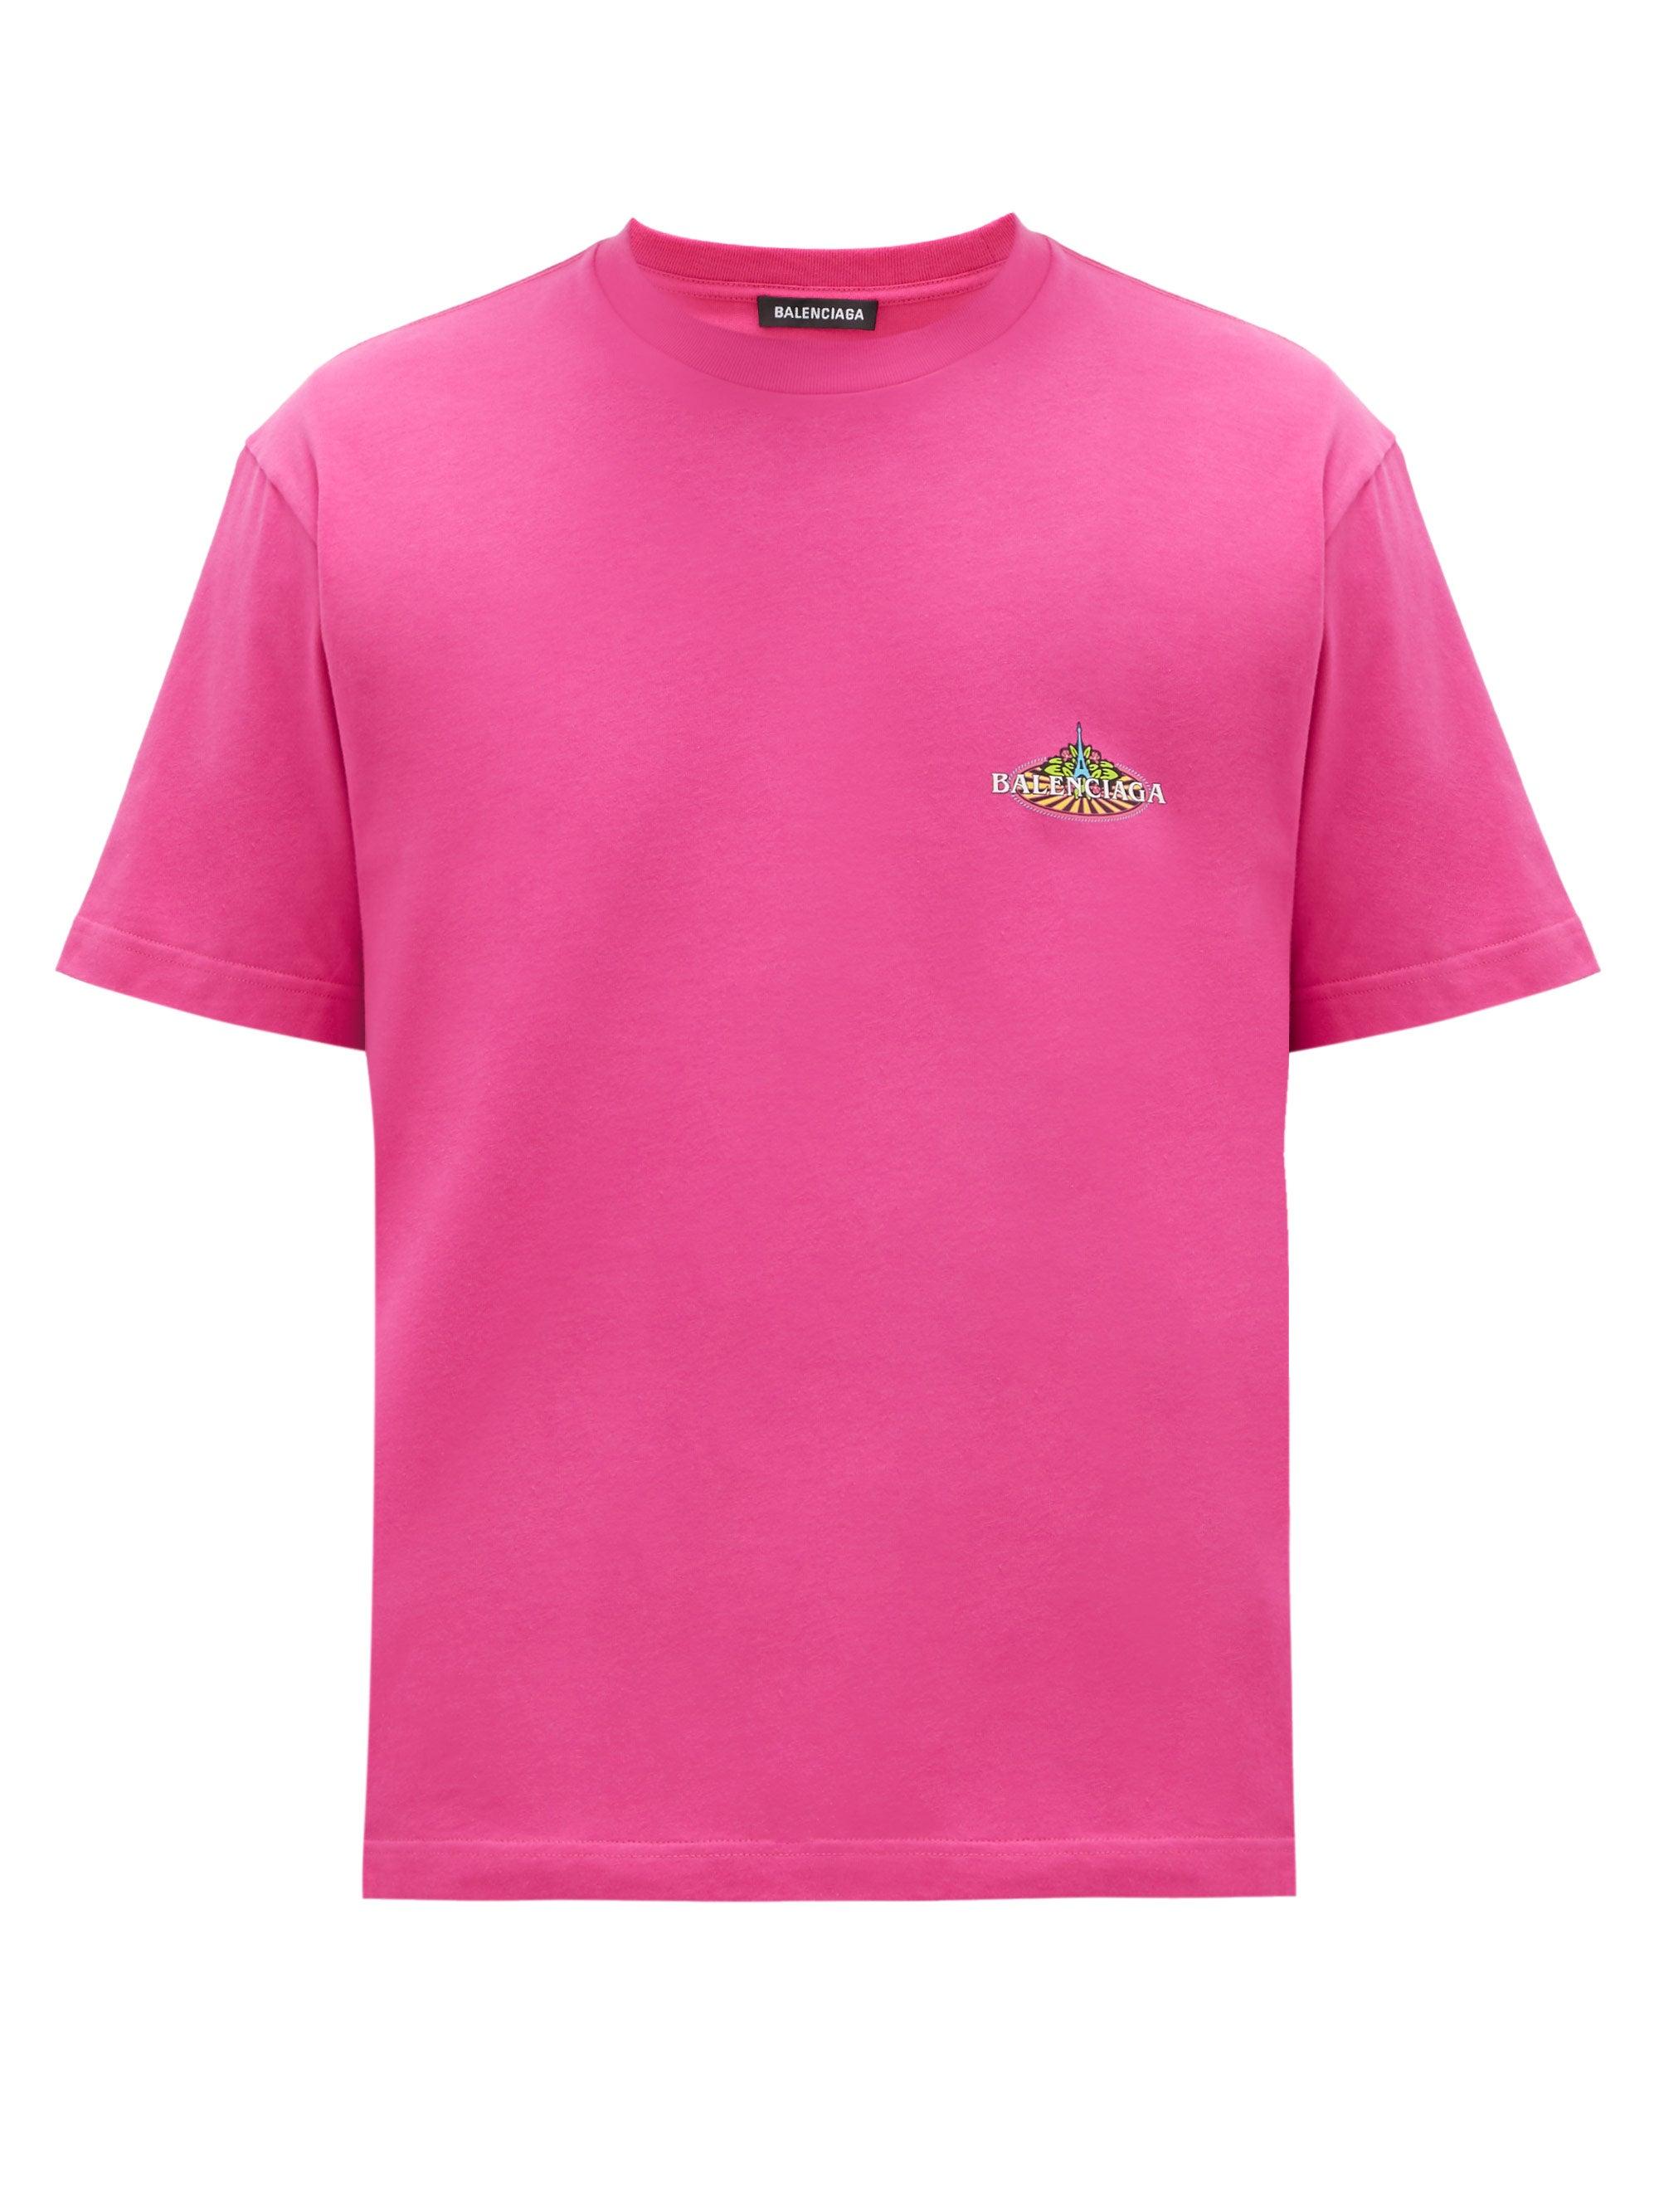 Balenciaga Bonjour-print Cotton T-shirt in Pink for Men - Lyst